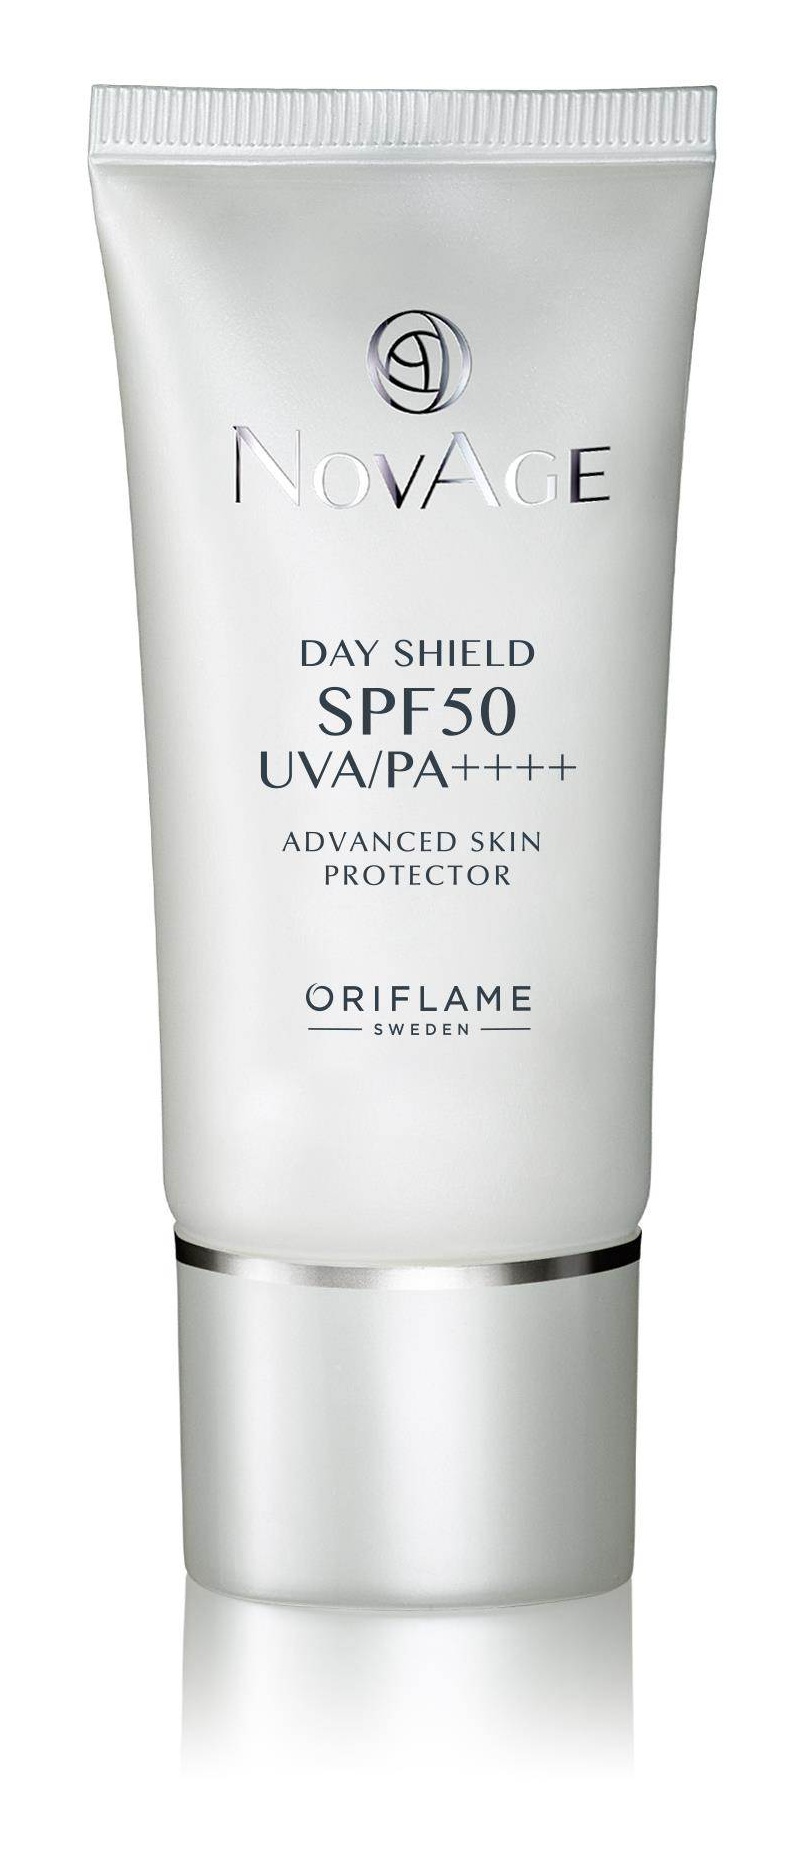 Oriflame Day Shield SPF50 UVA/PA++++ Advanced Skin Protector